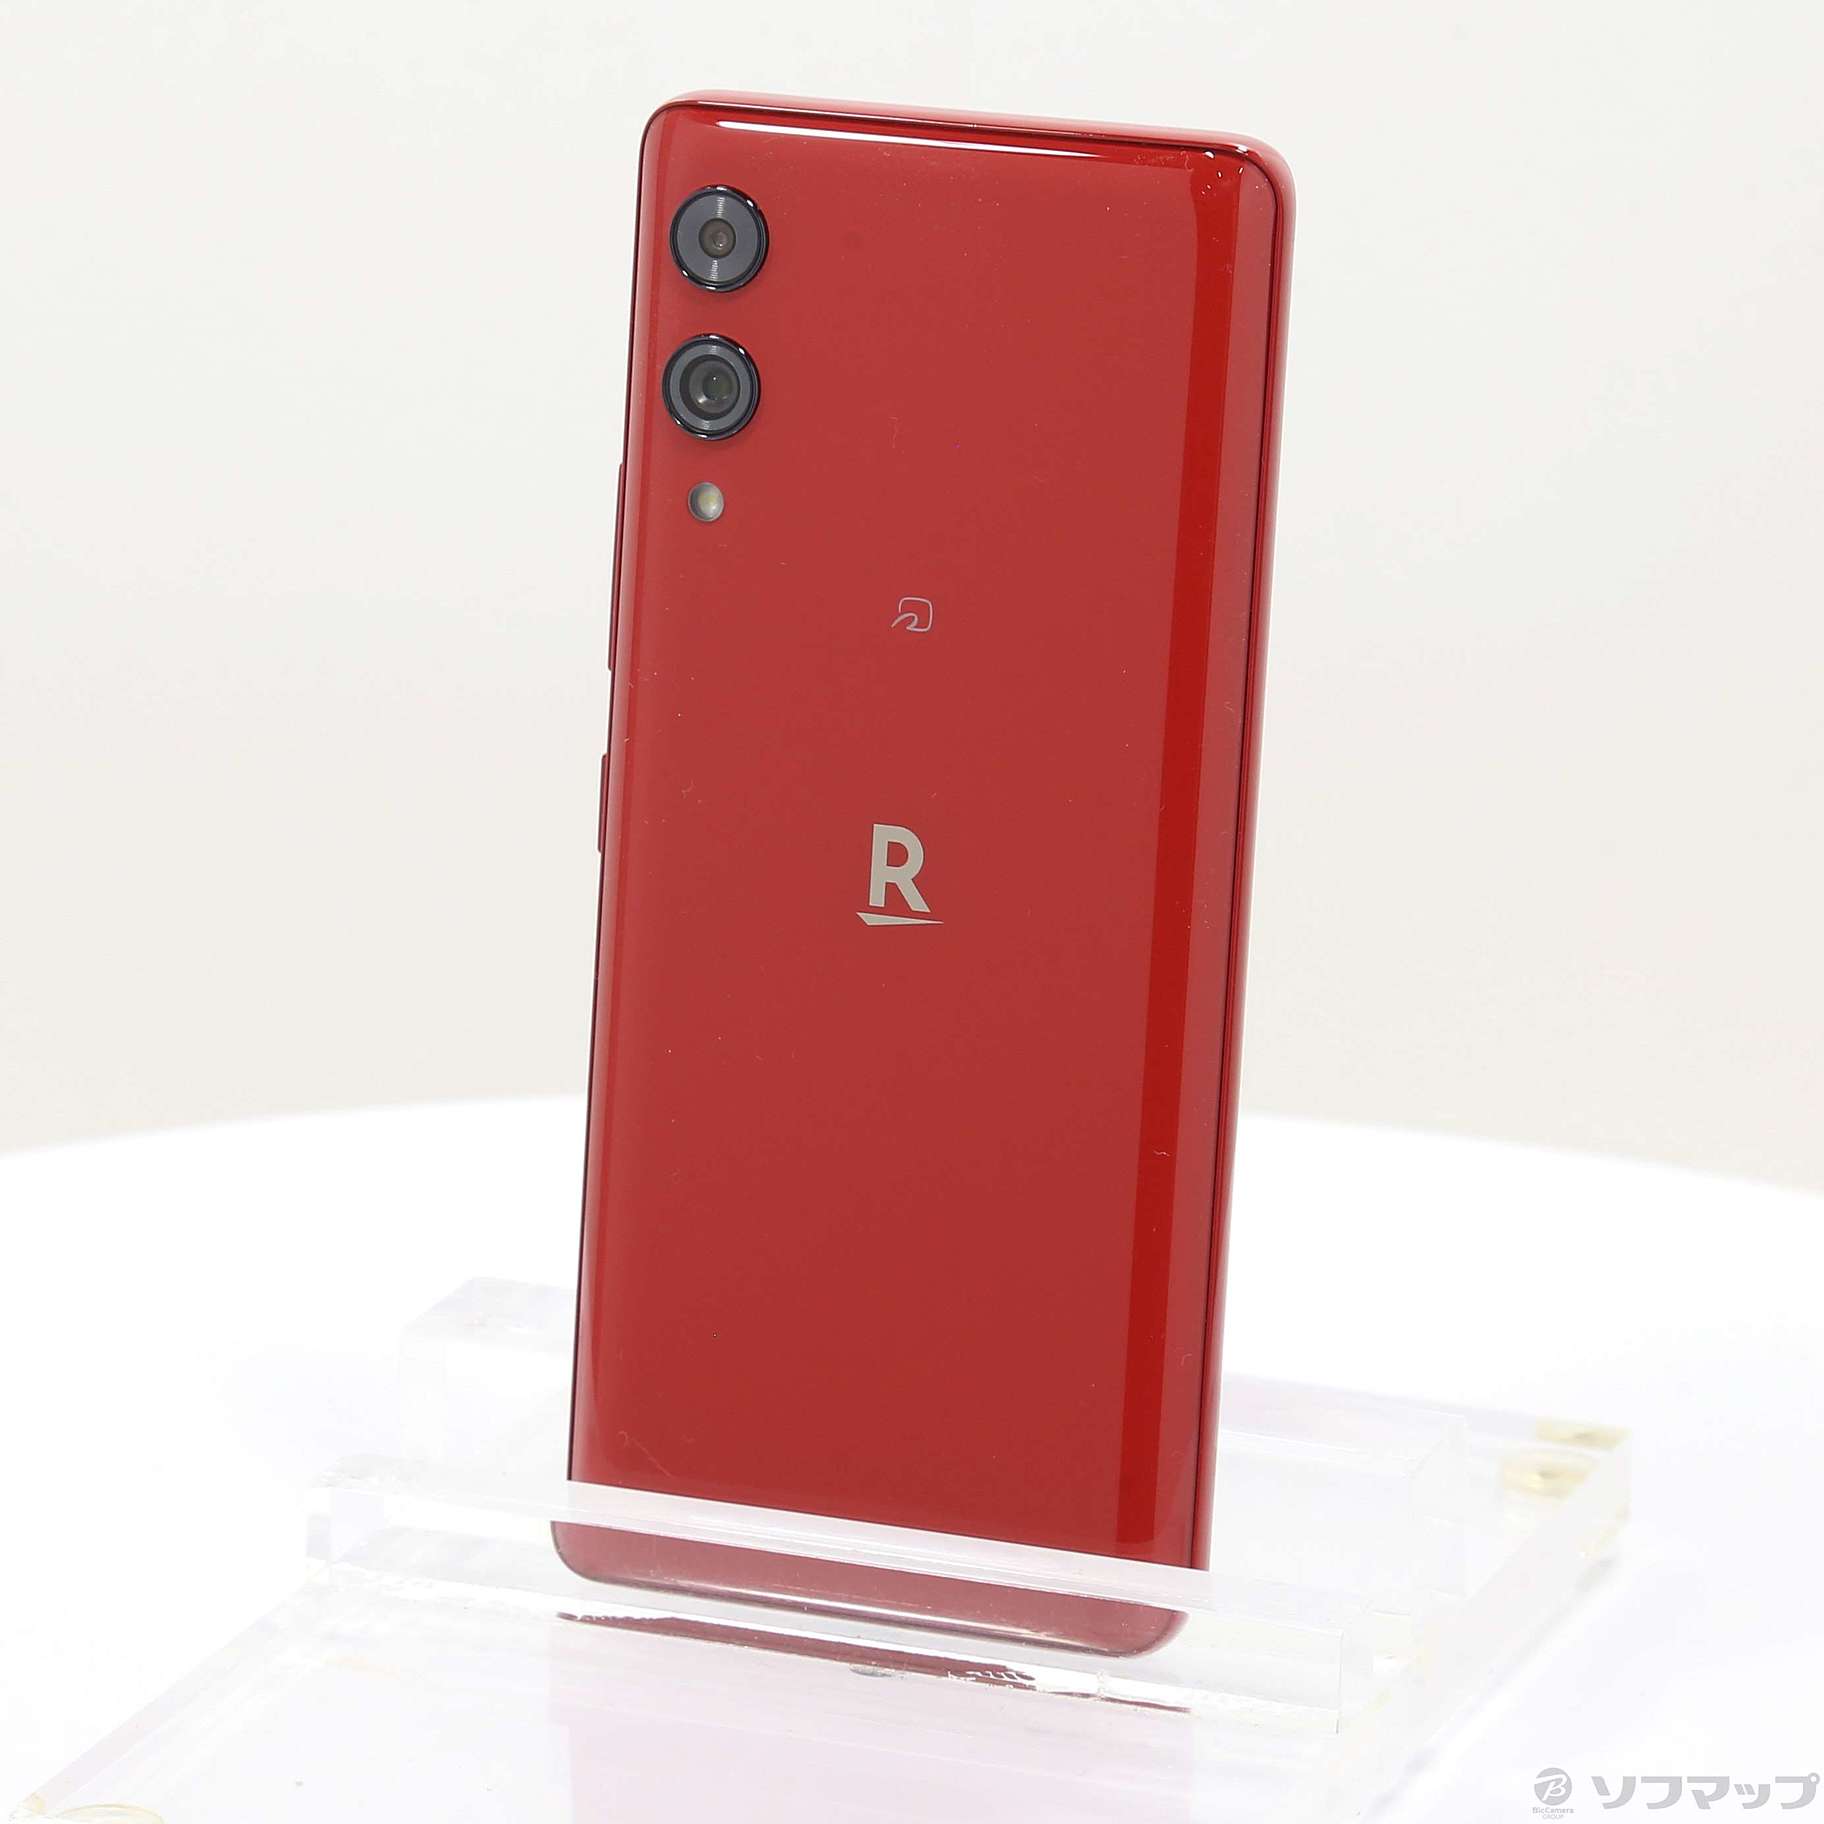 Rakuten Hand 5G クリムゾンレッド 128 GB - スマートフォン本体